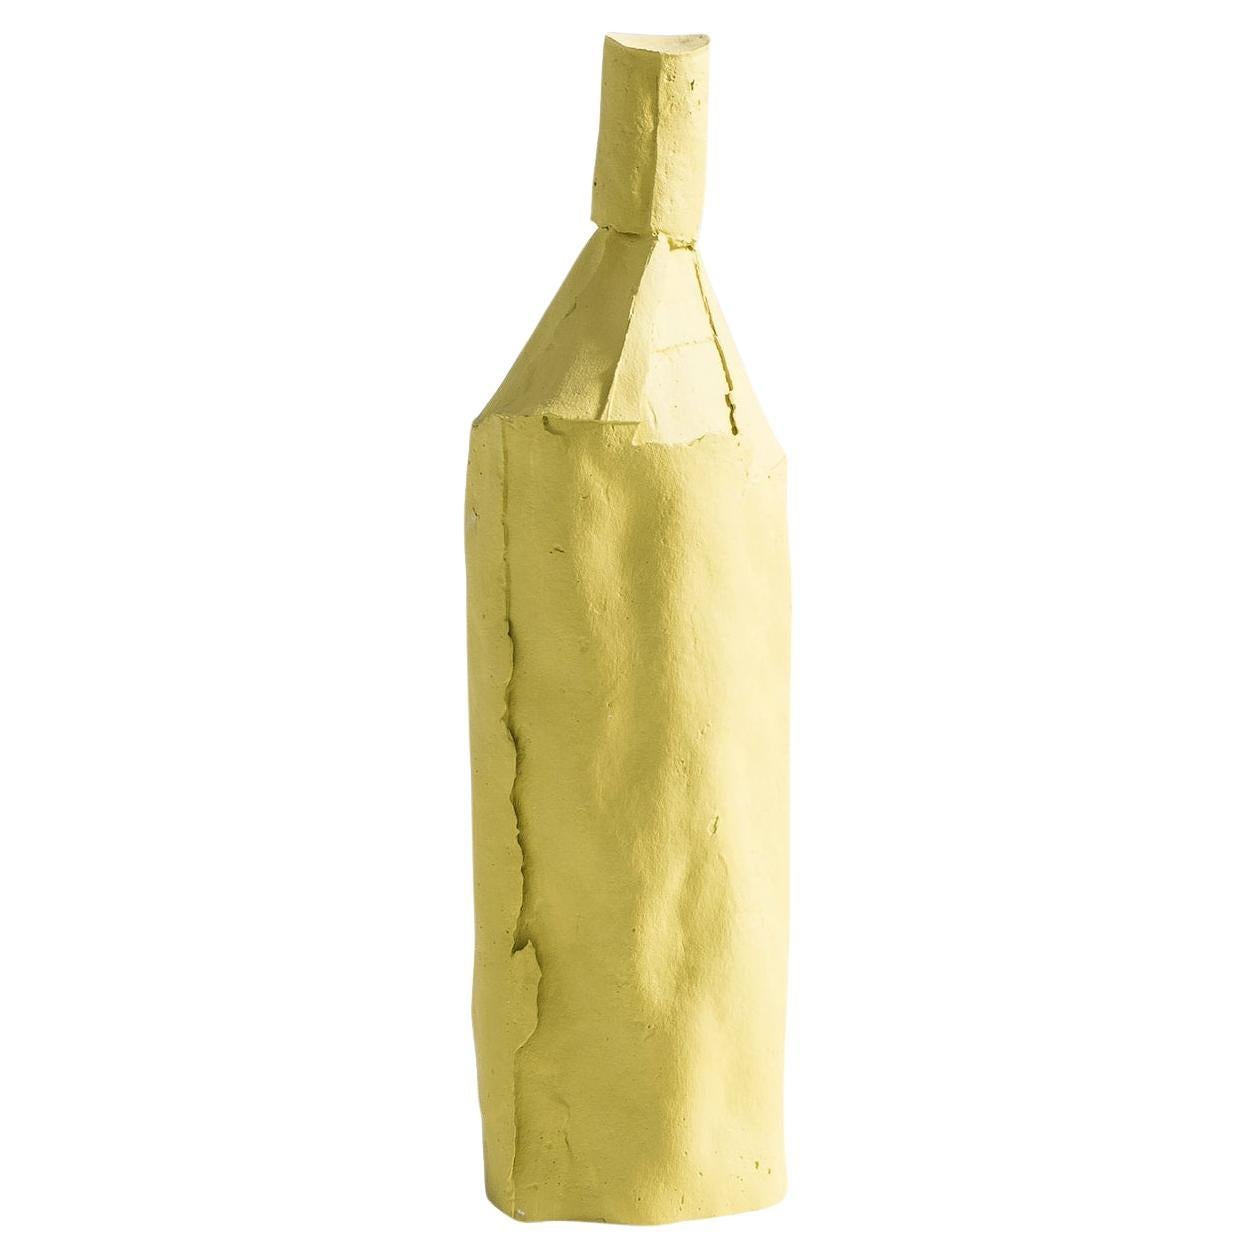 Cartocci Liscia Yellow Decorative Bottle For Sale